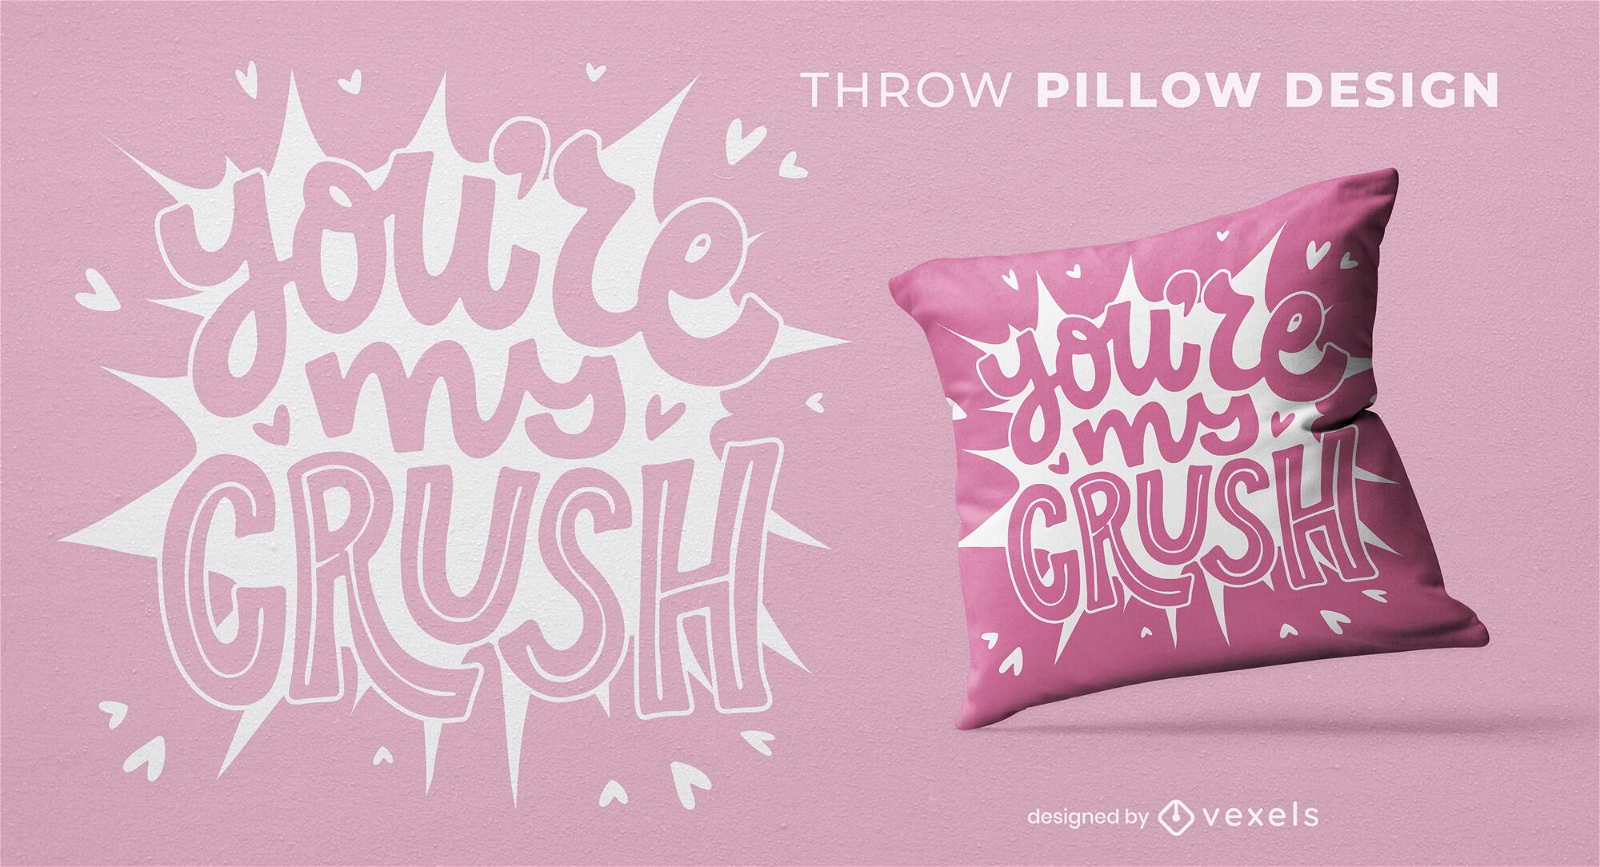 Valentine's Day crush quote throw pillow design